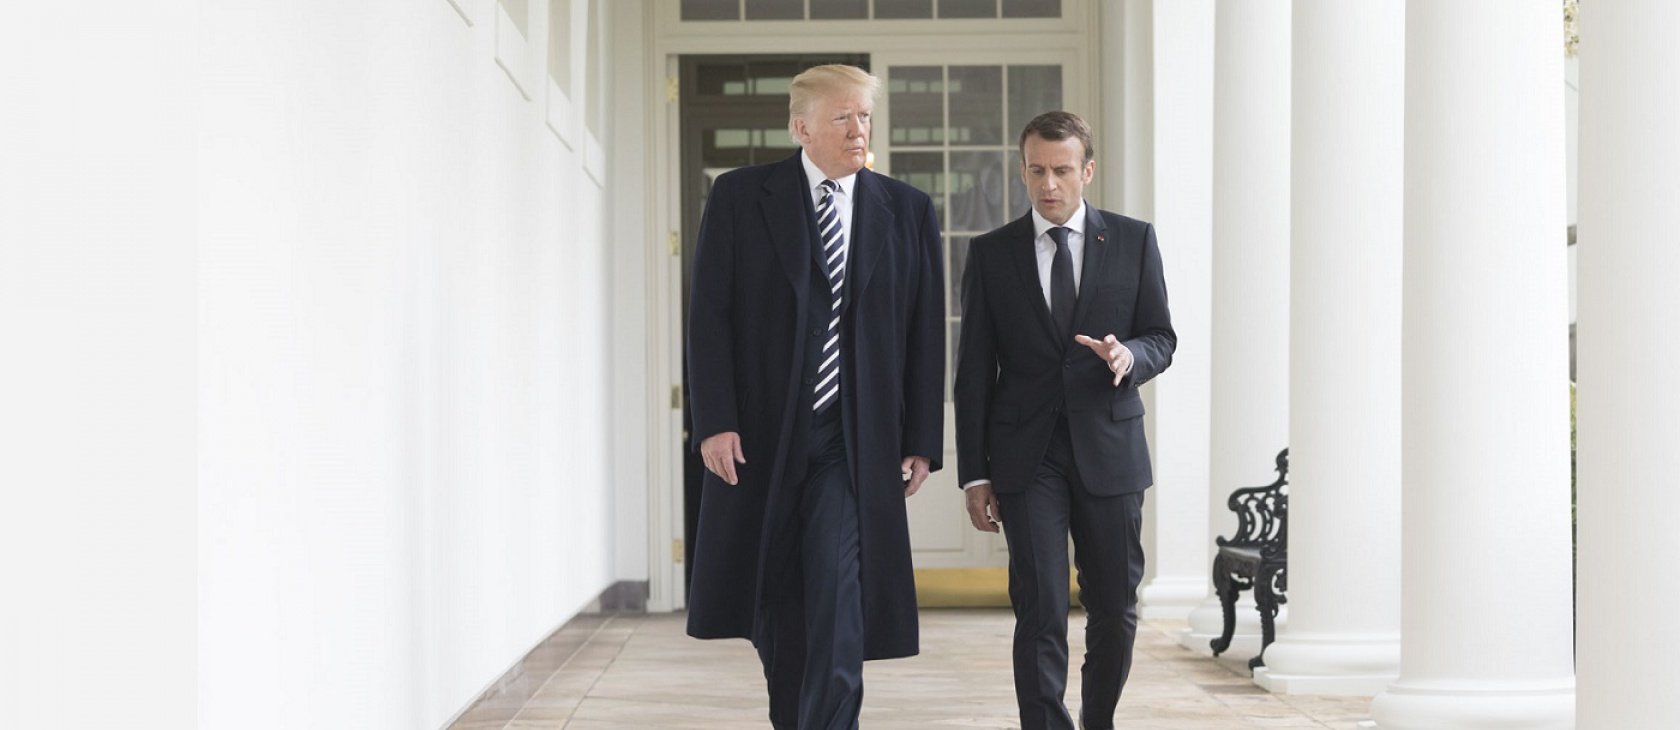 Trump and Macron. Public domain image.